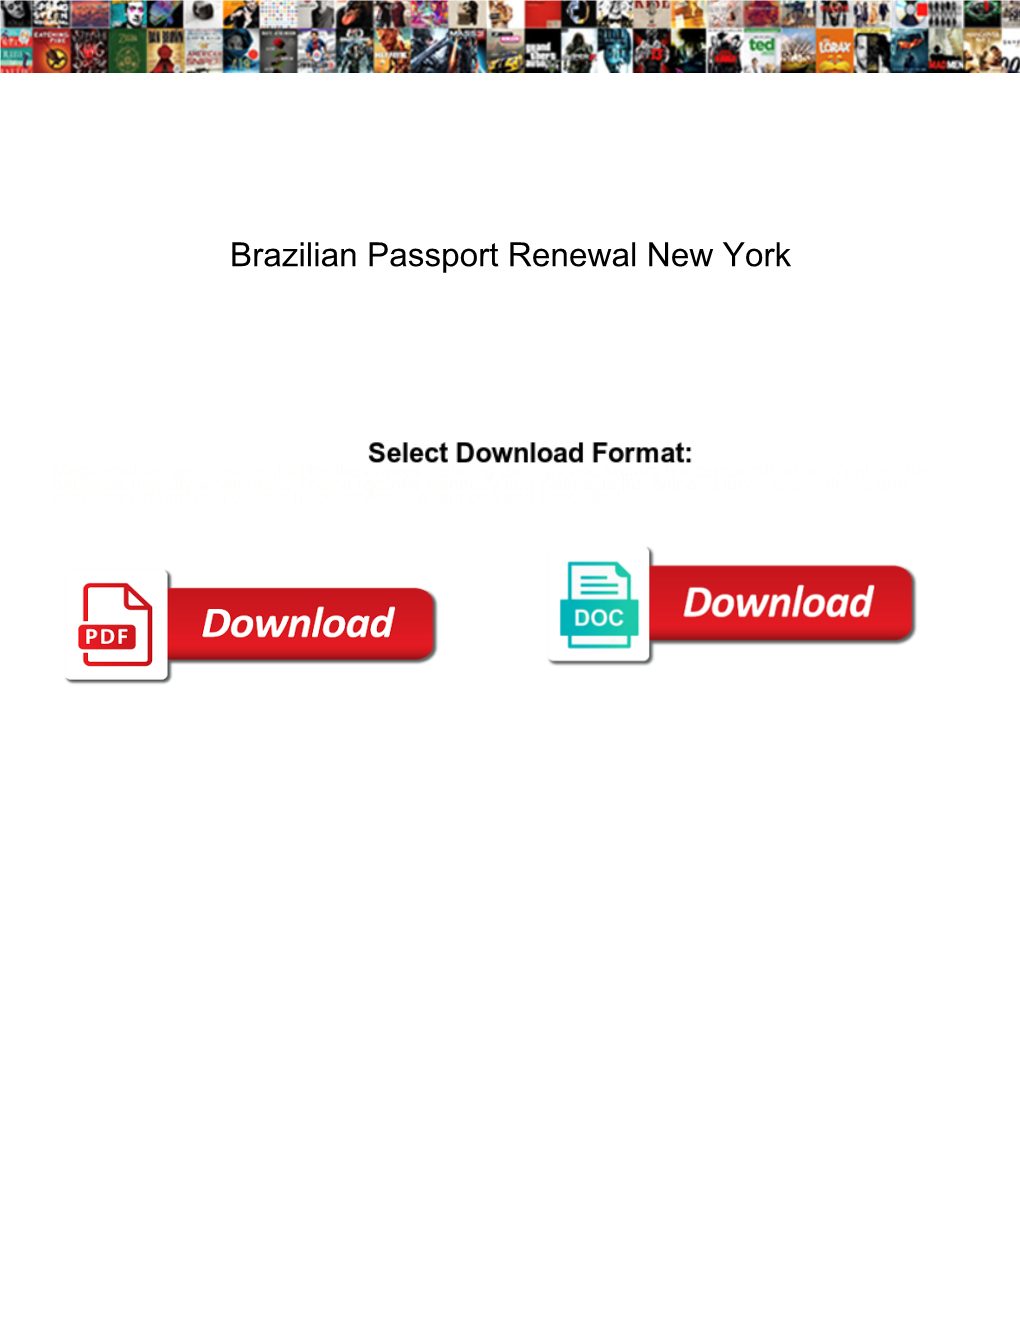 Brazilian Passport Renewal New York Trouble